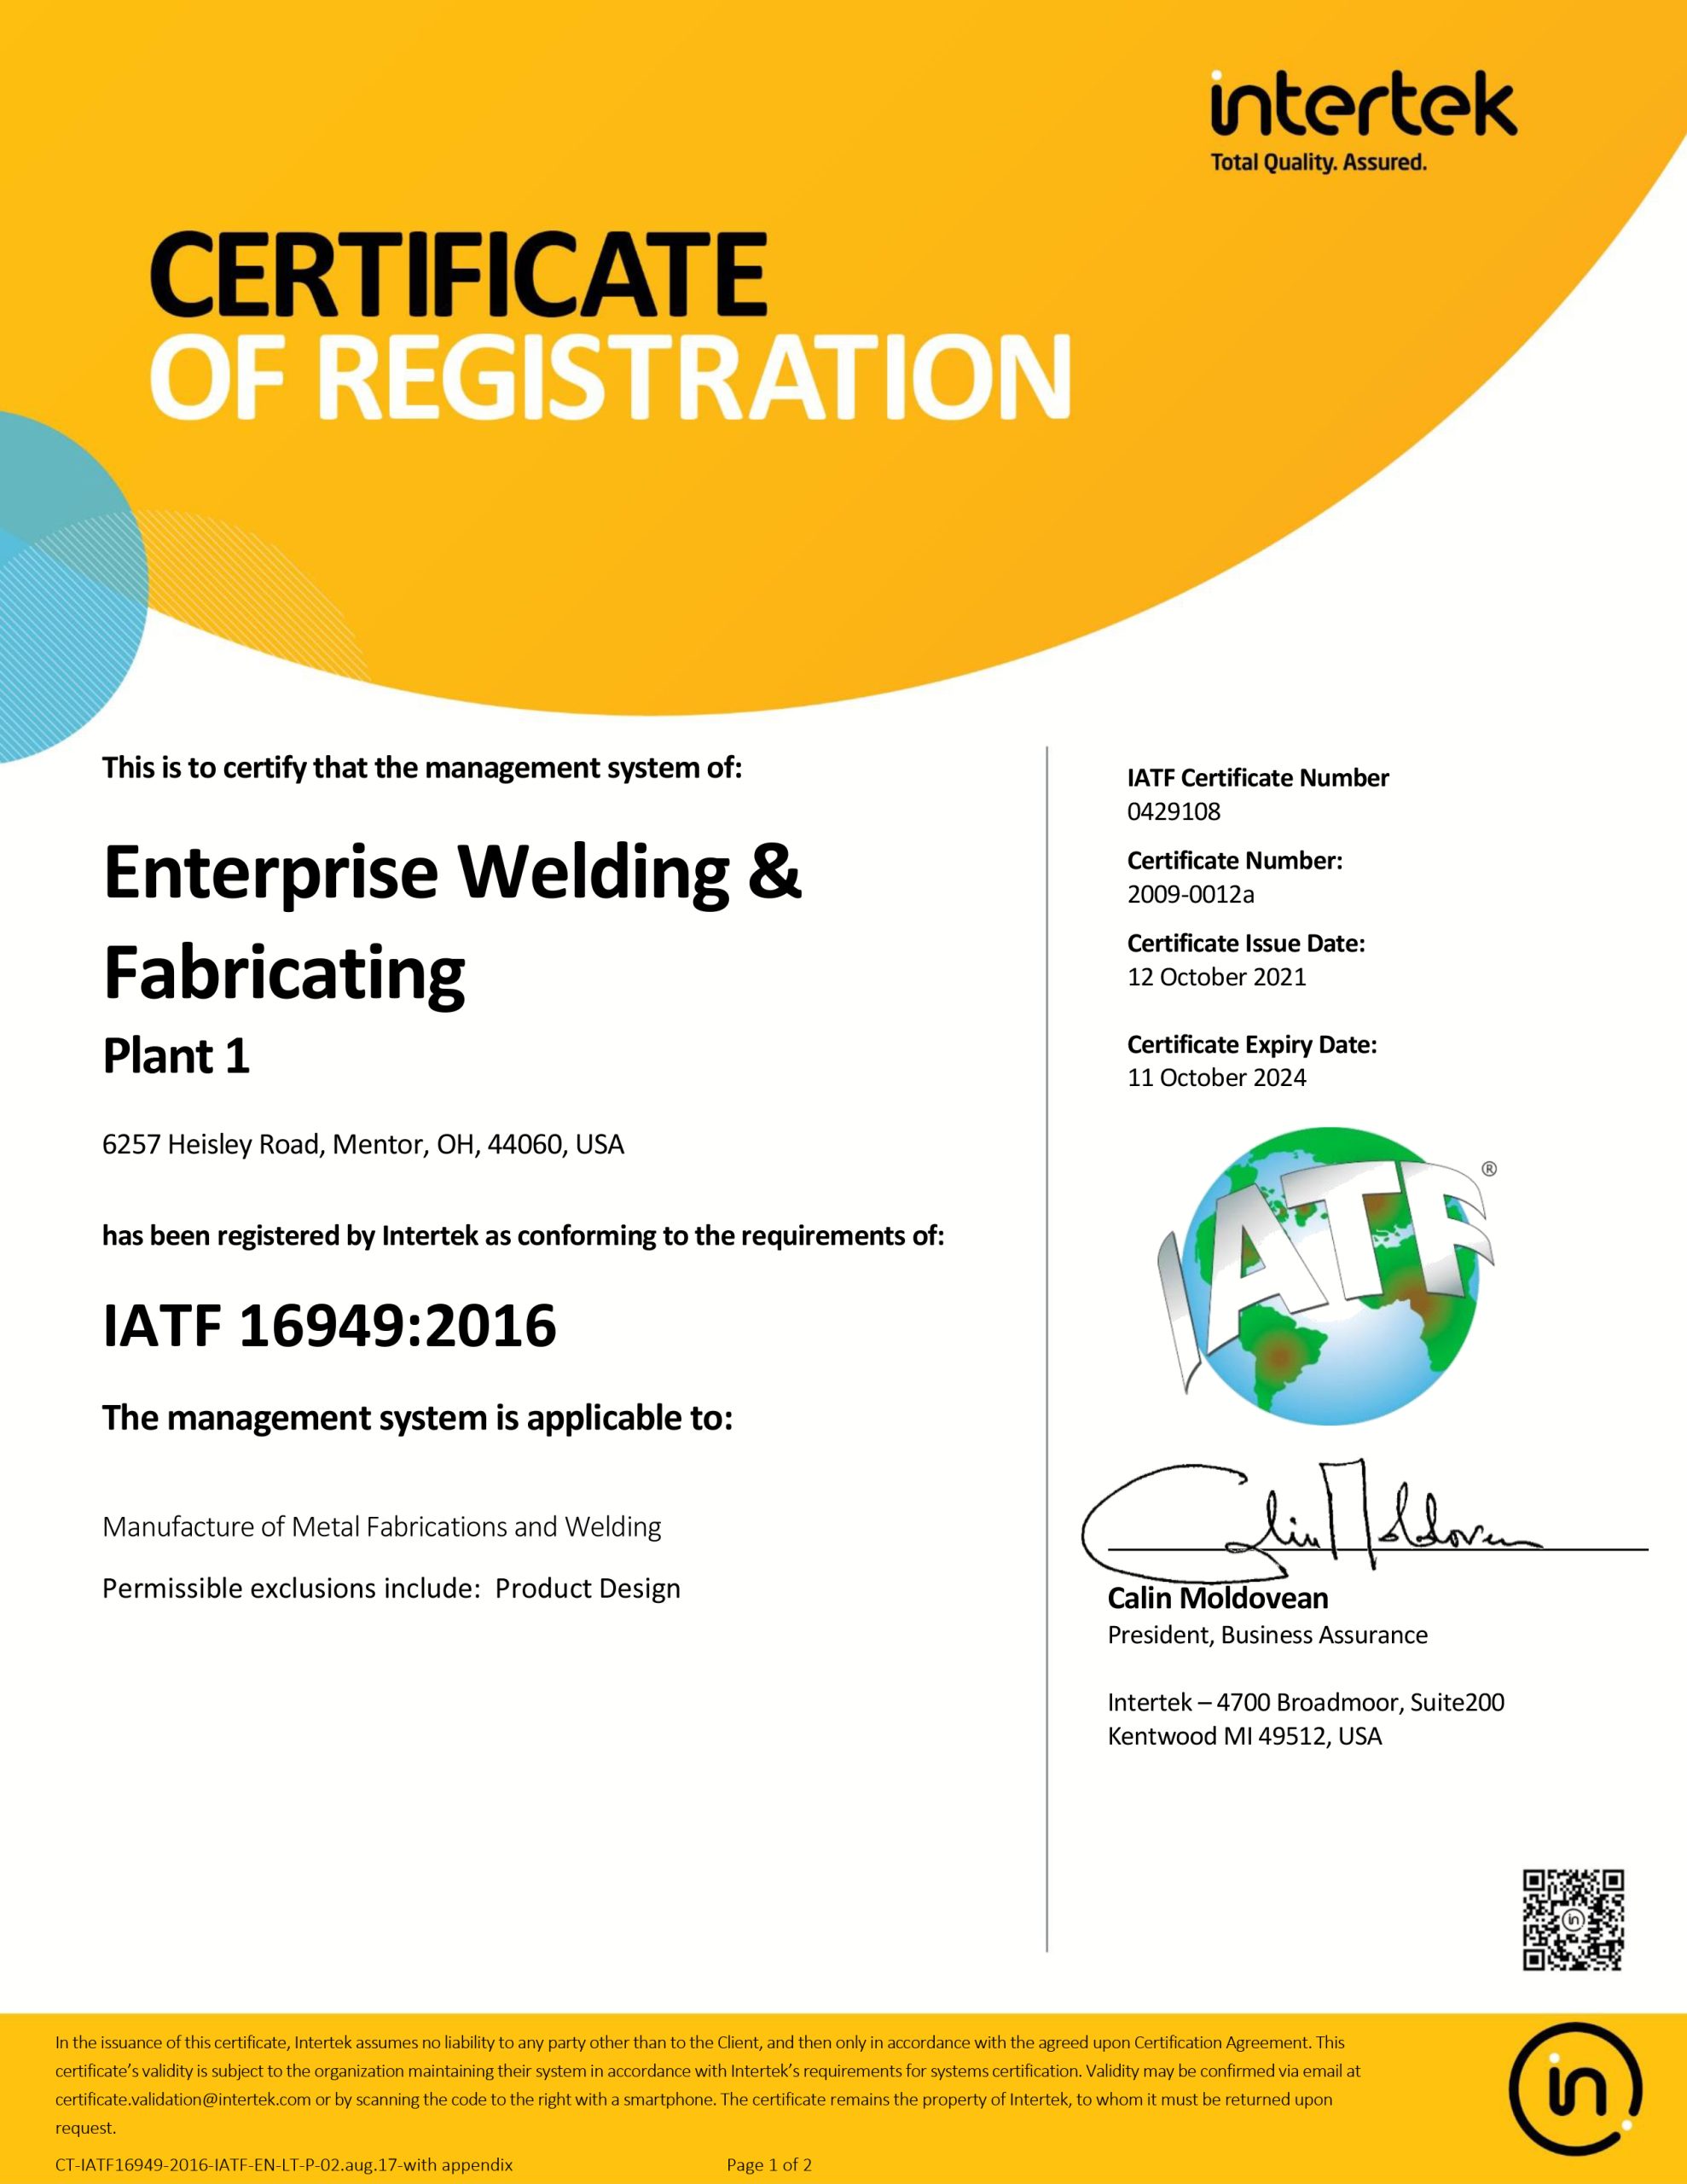 IATF 16949-2016 Heisley certificate